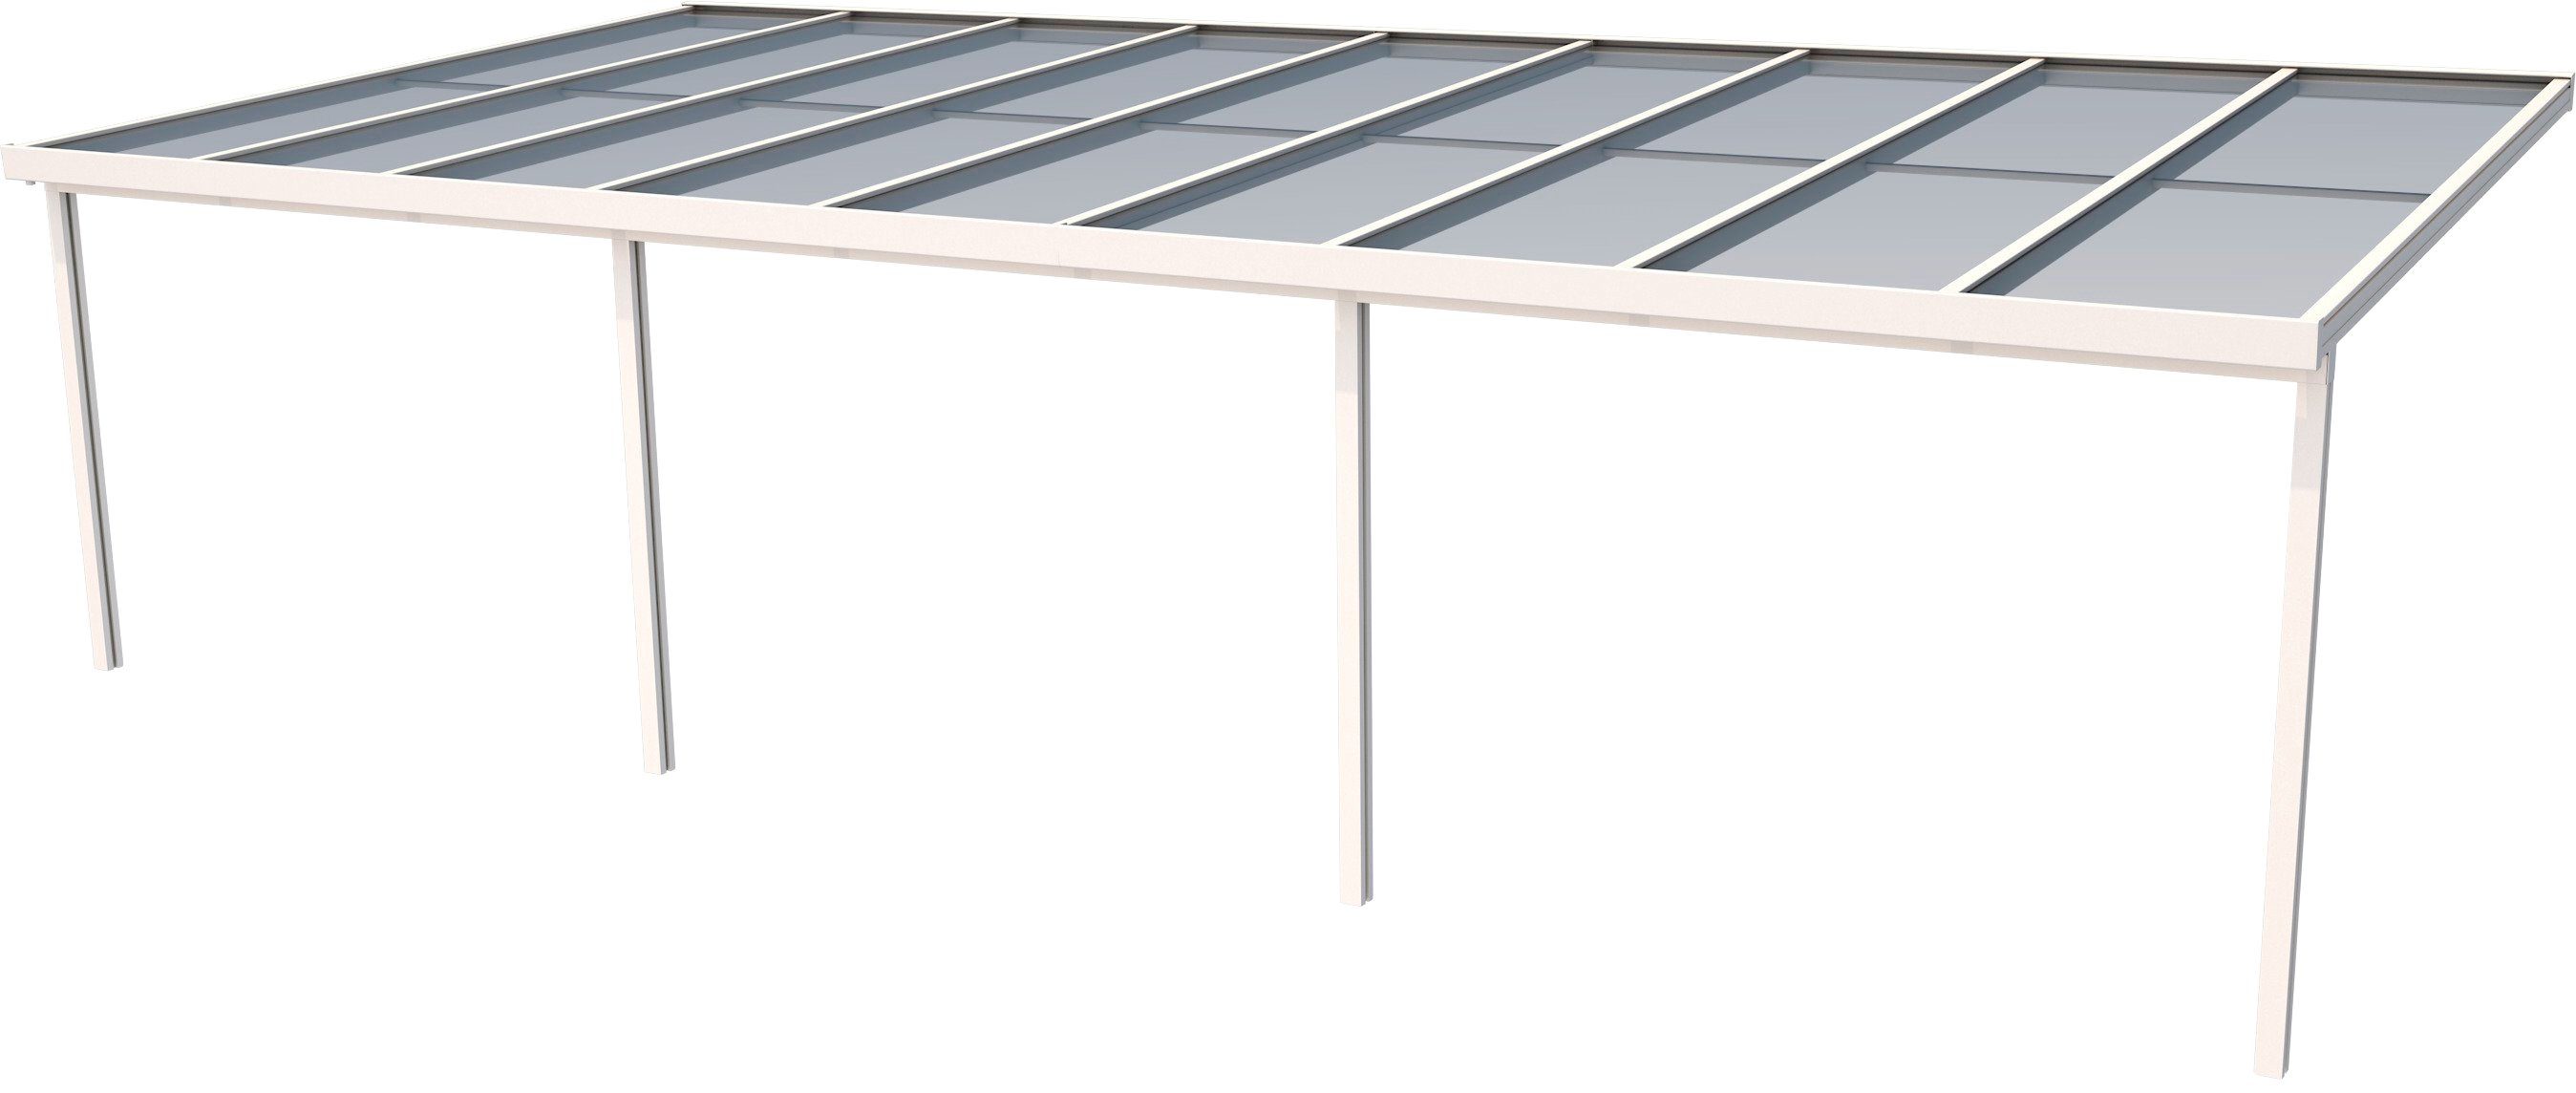 GUTTA Terrassendach Premium, BxT: 913,5x406 cm, Bedachung Doppelstegplatten, BxT: 914x406 cm, Dach Polycarbonat Opal